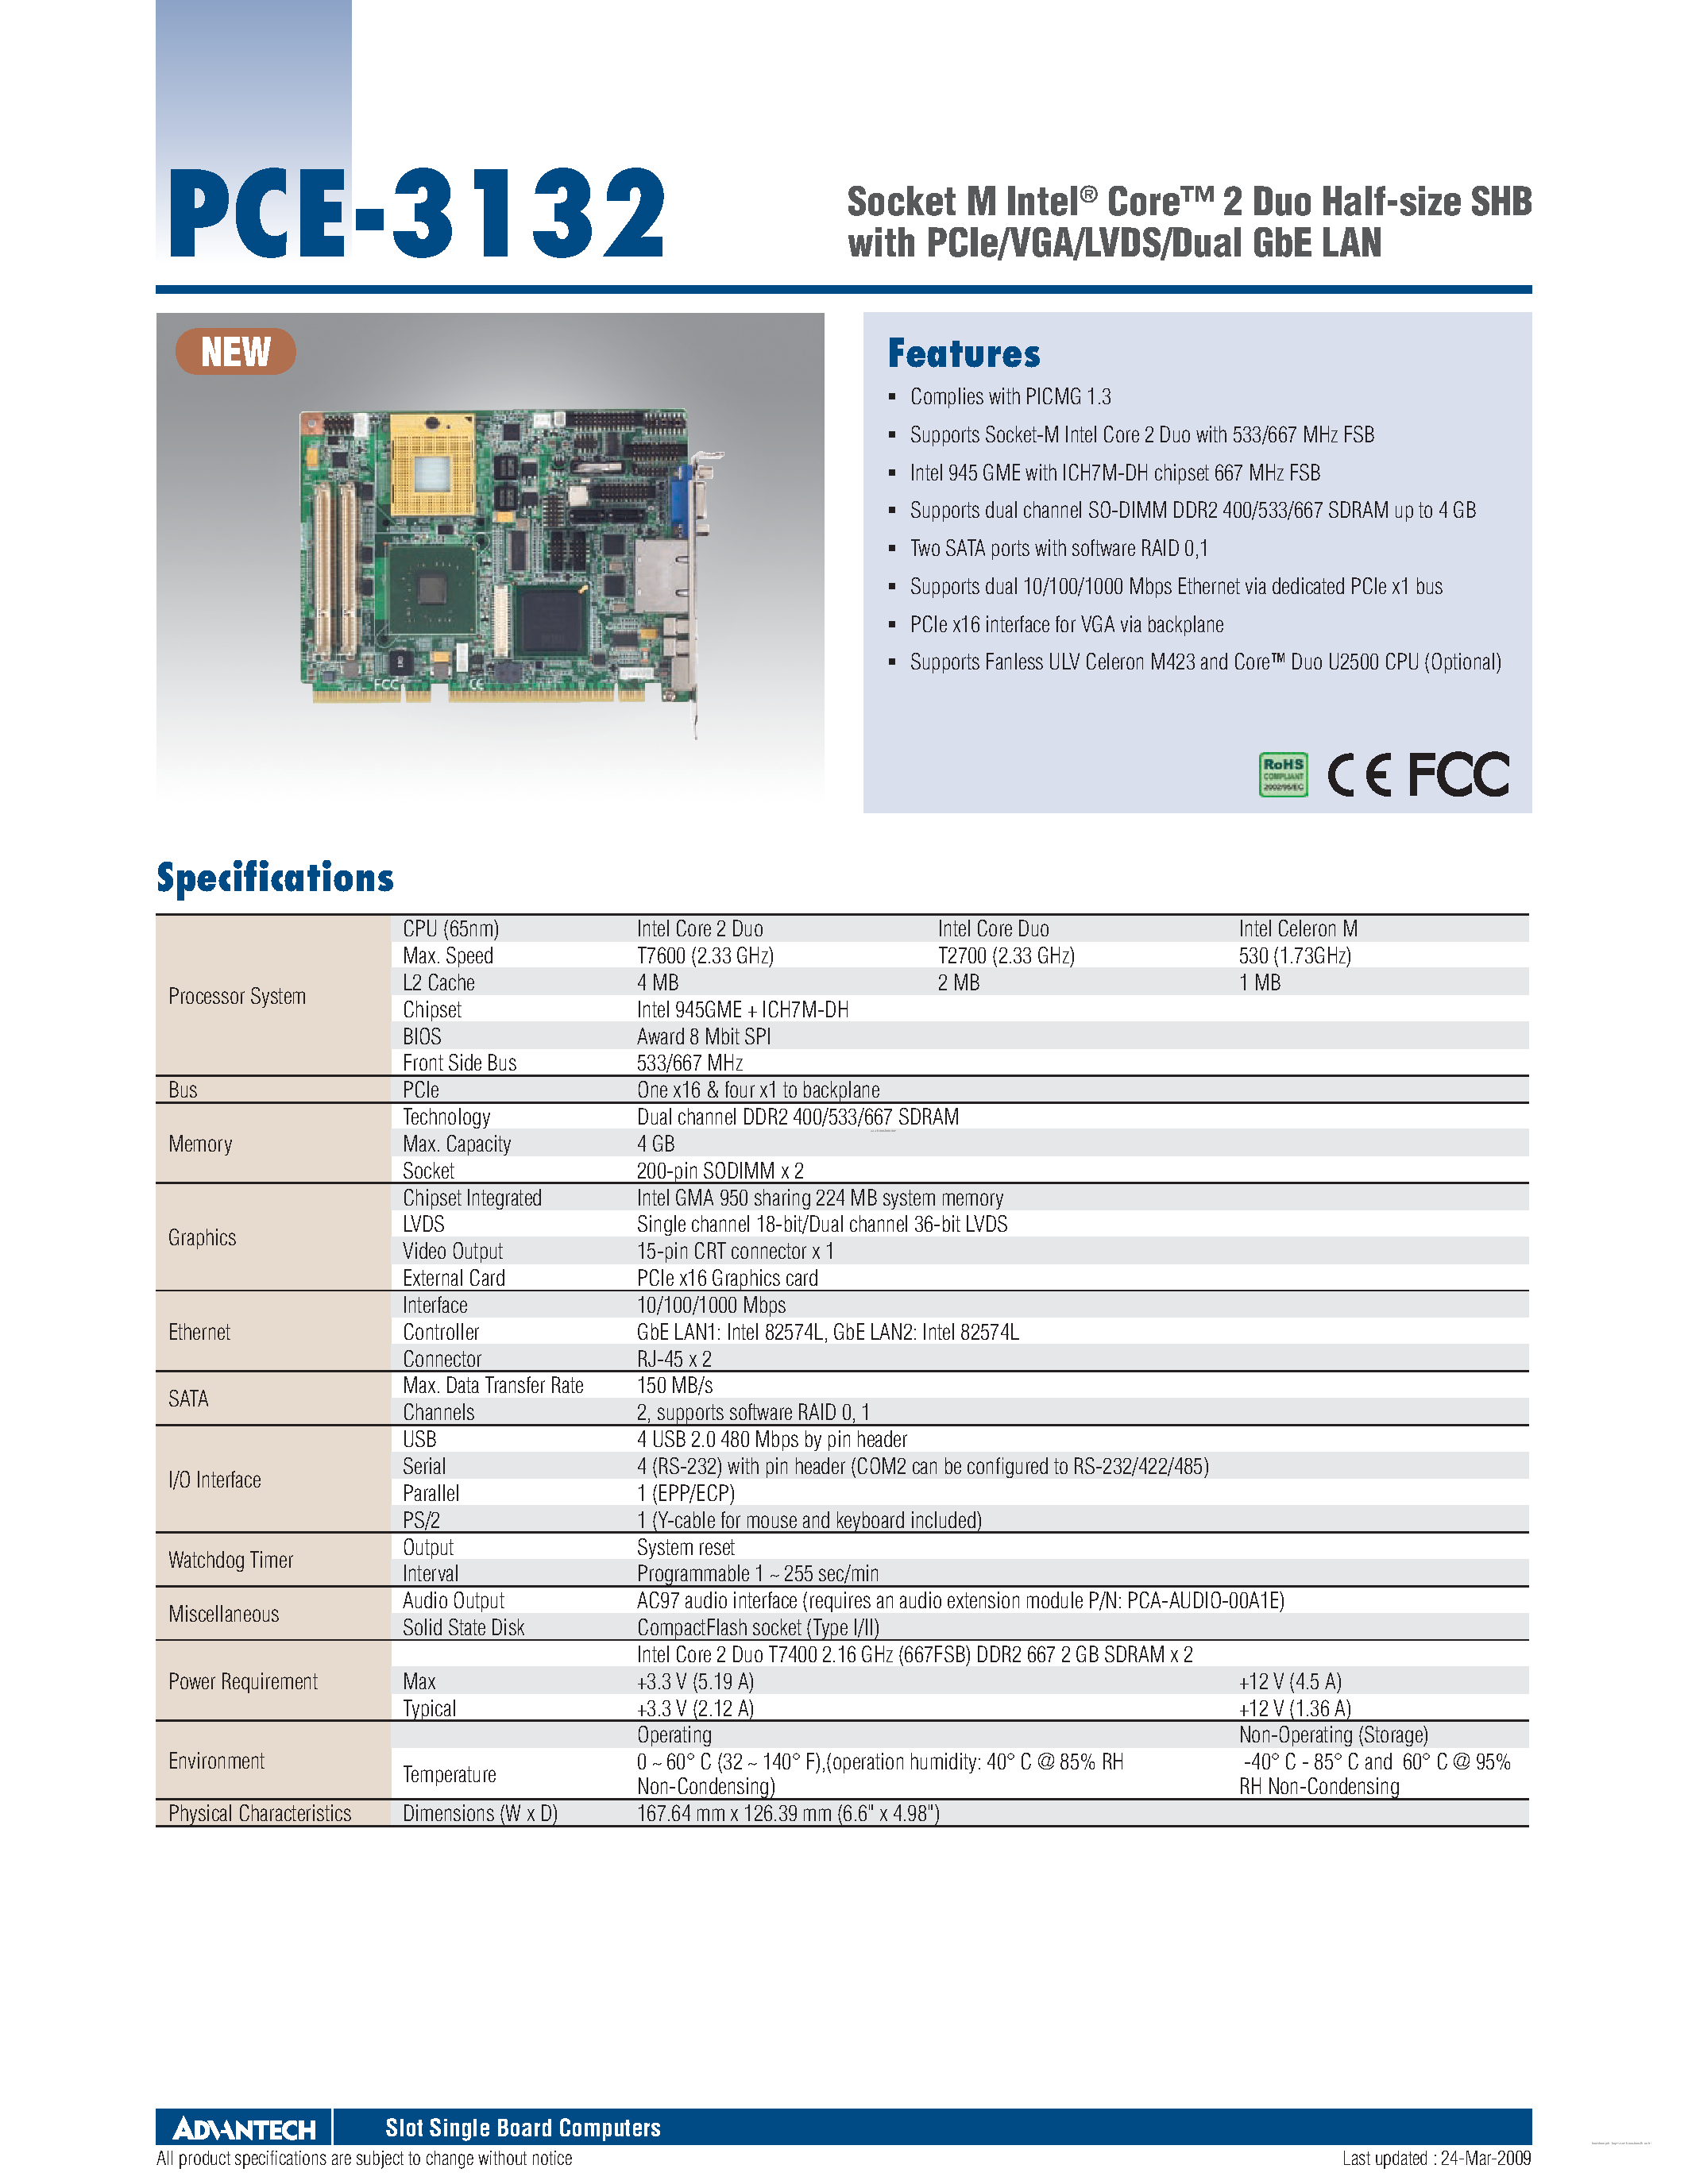 Даташит PCE-3132 - Socket M Intel Core страница 1